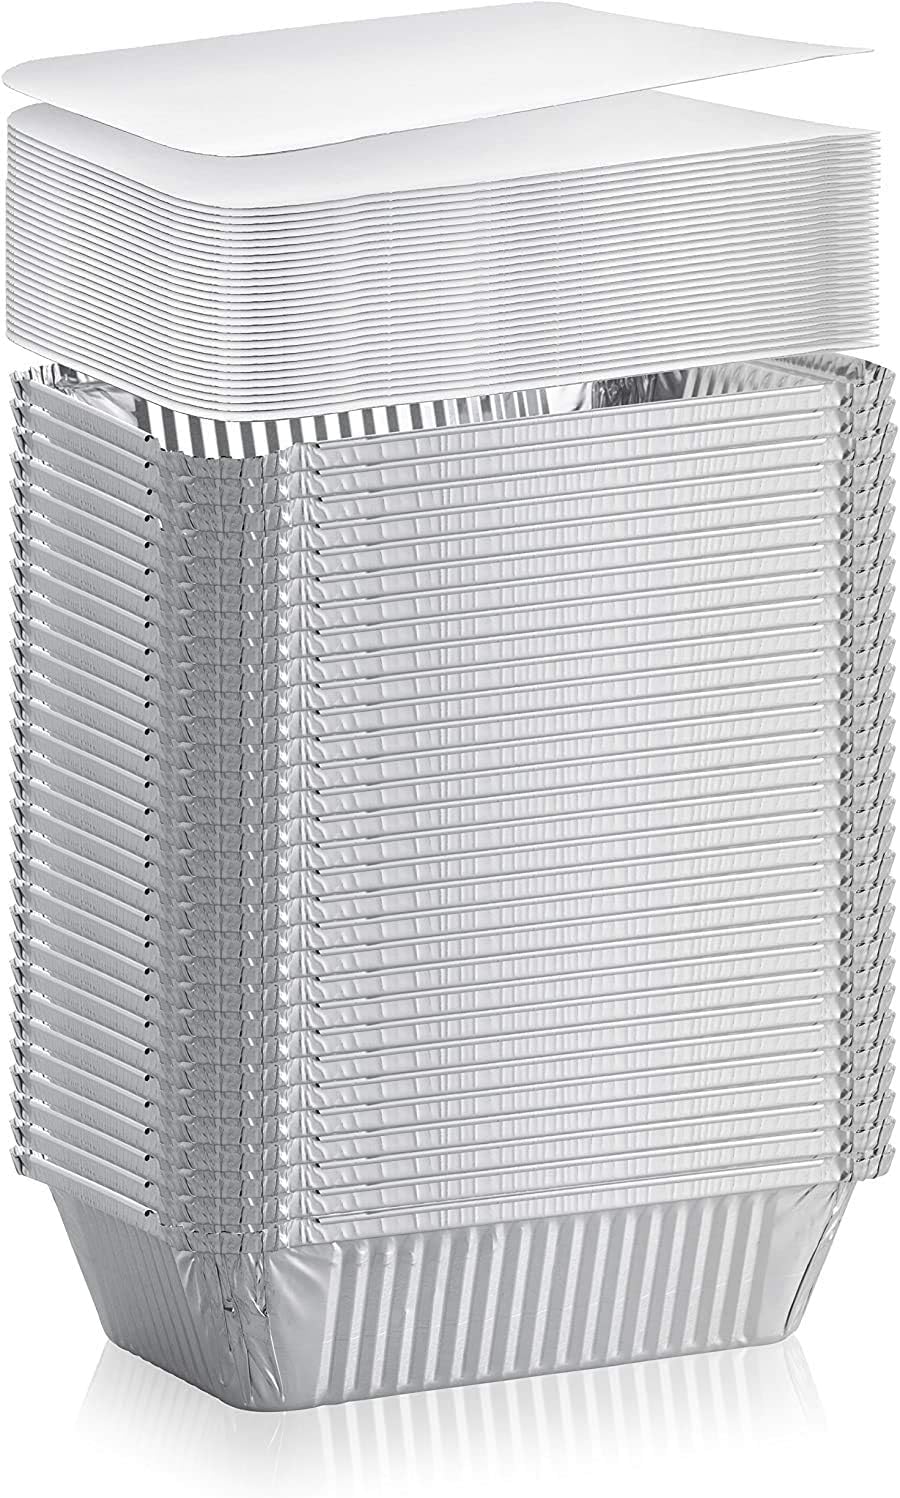 Board Lid For 5Lb Aluminum Oblong Pan 9.75" x 7.25" Disposable VeZee   